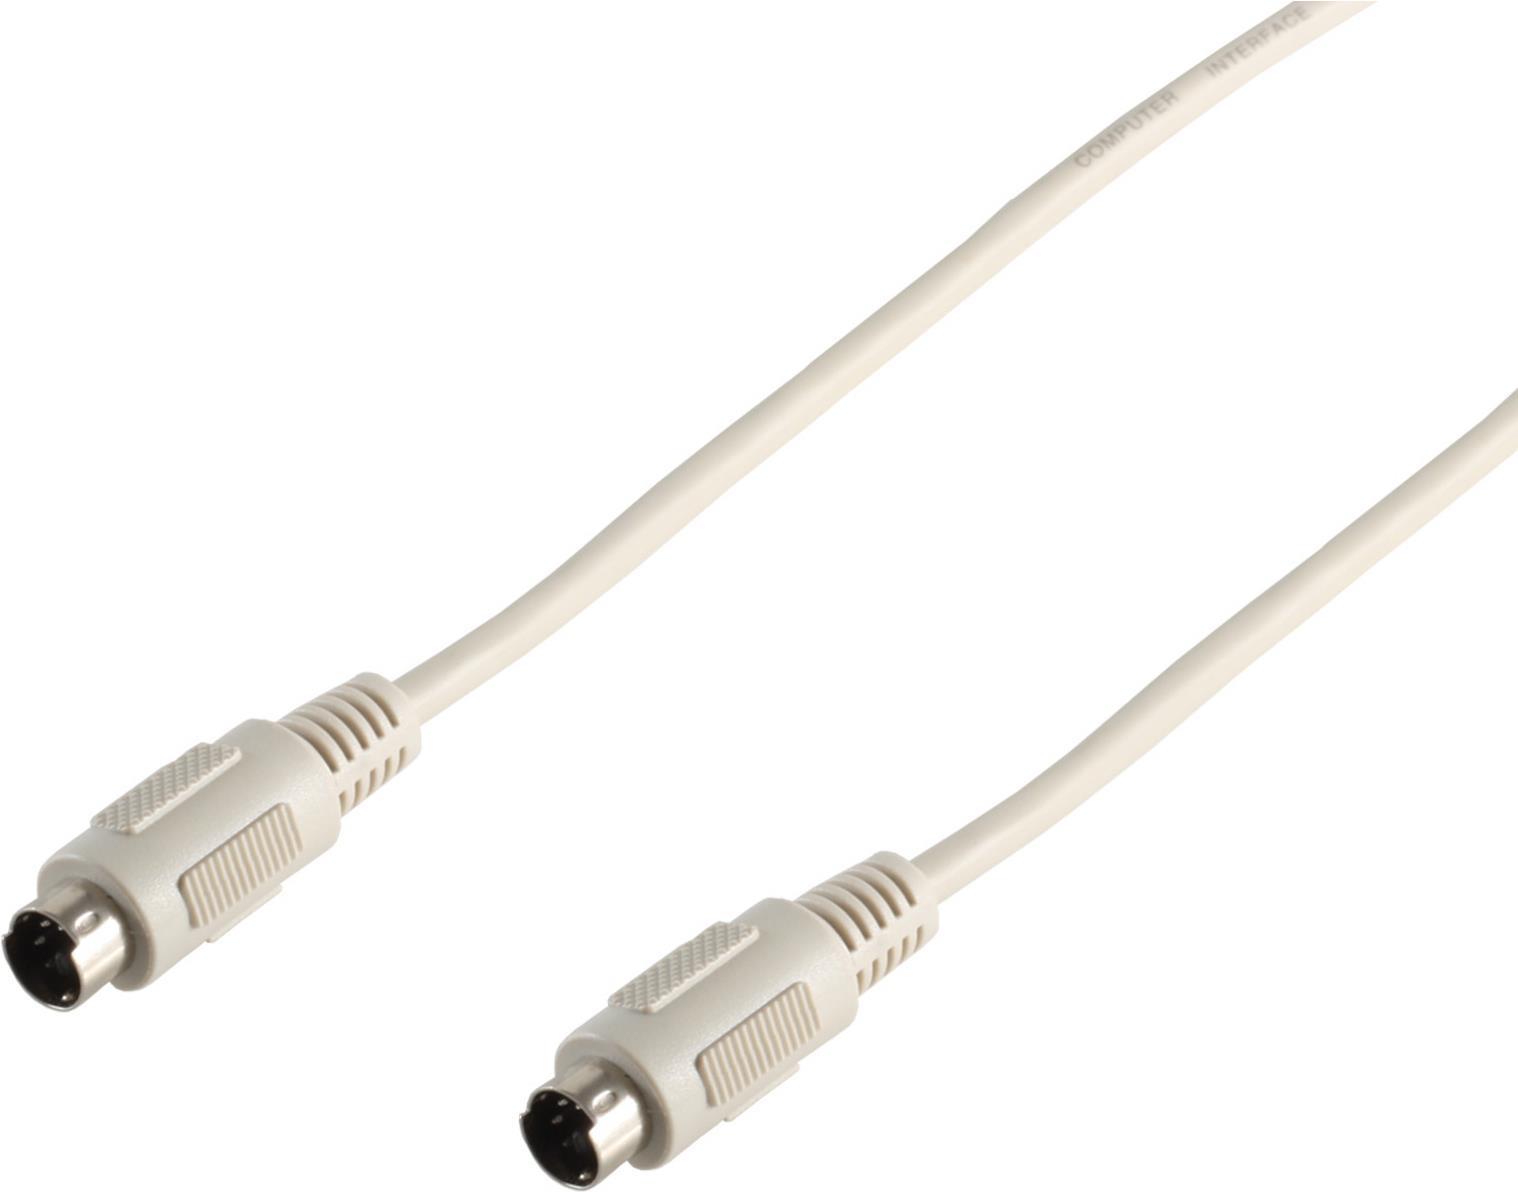 ShiverPeaks S/CONN maximum connectivity PS2 Kabel, 2 x 6-pol. MINI DIN-Stecker, 1,8m (78107-2)